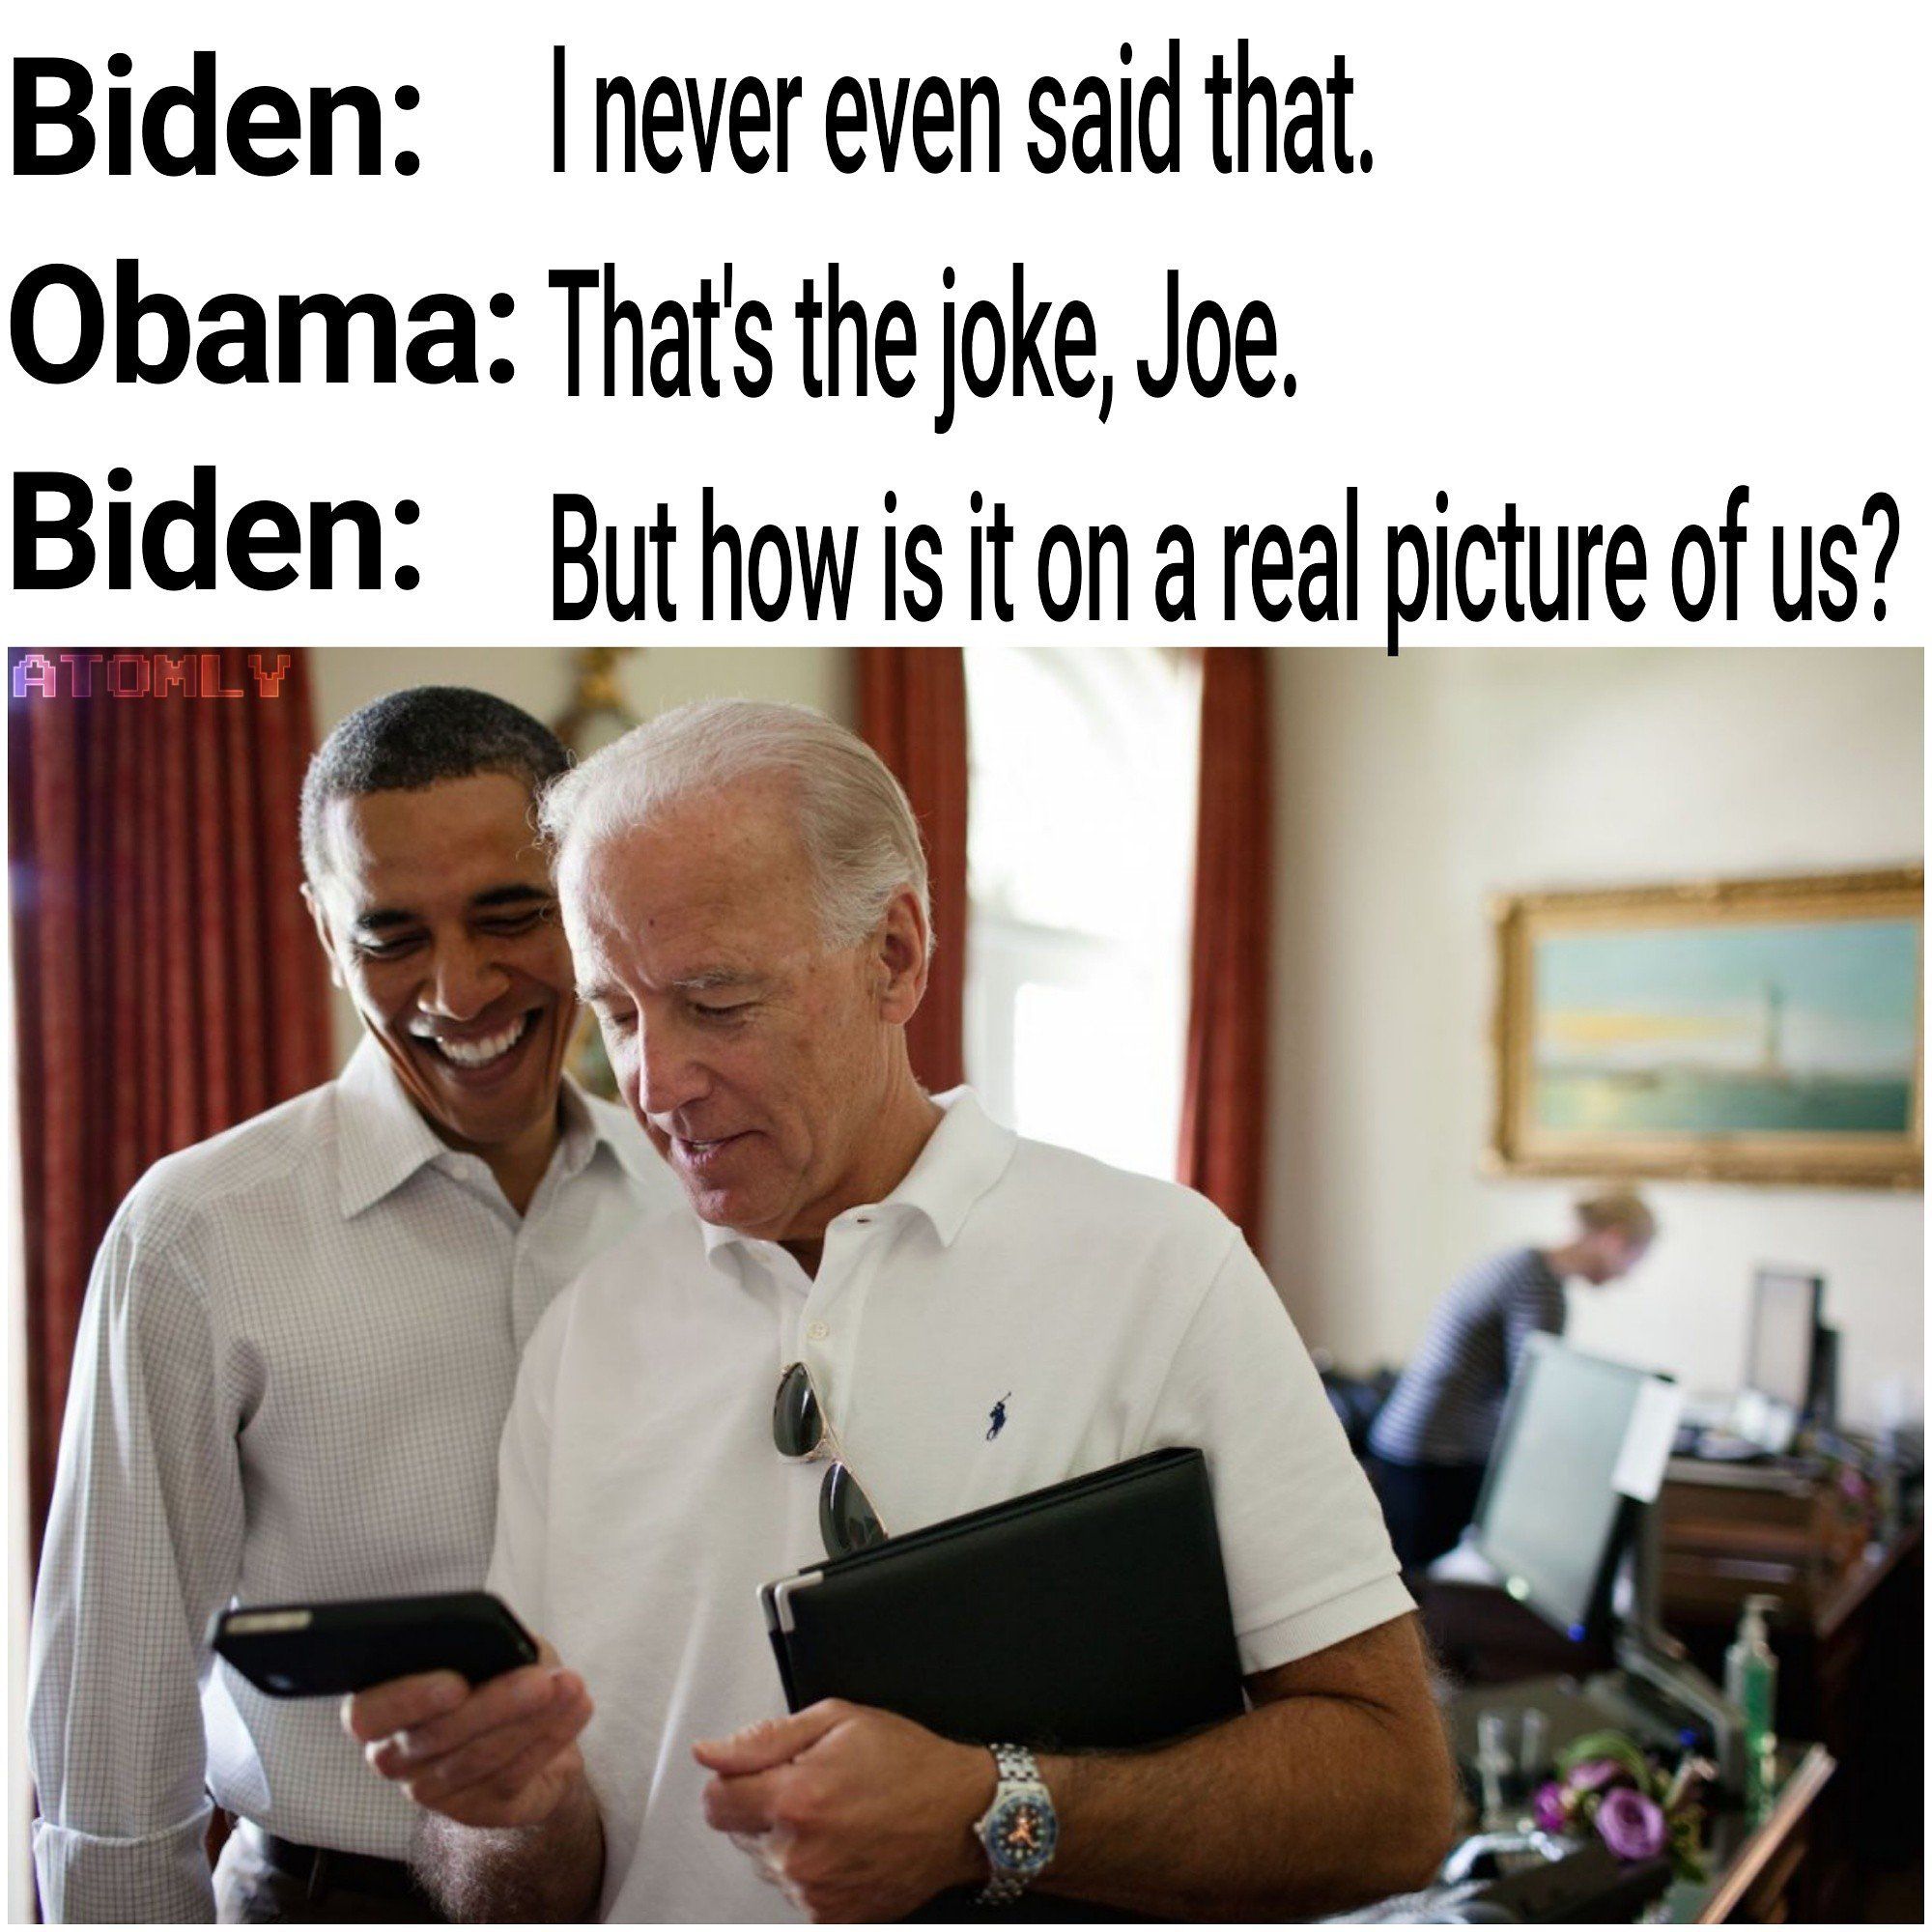 It's called a dank meme, Joe